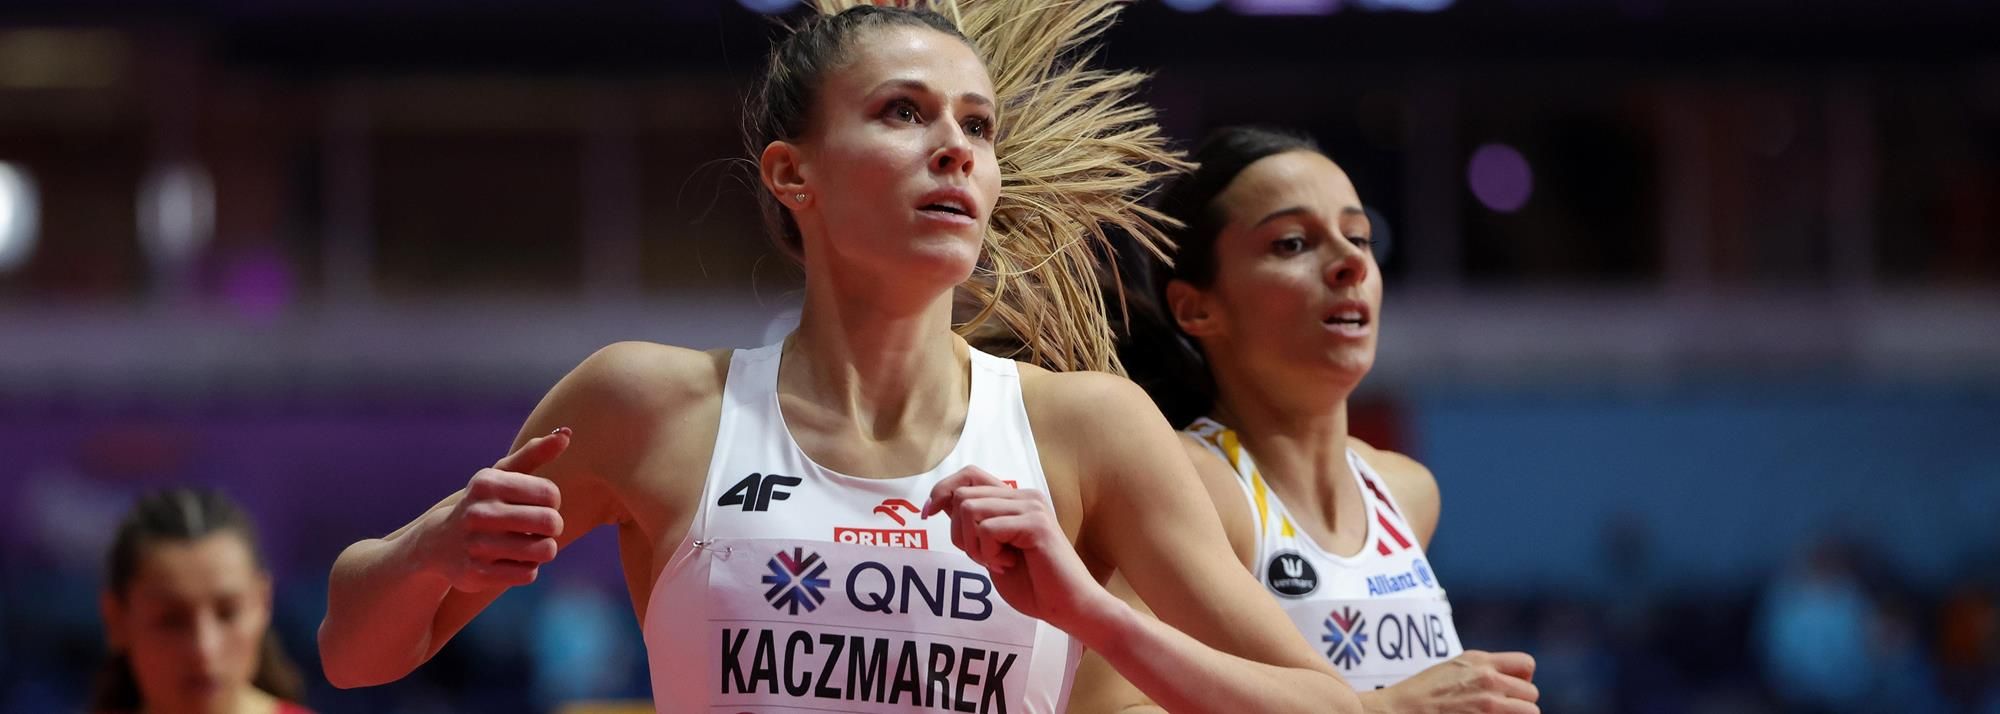 Natalia KACZMAREK | Profile | World Athletics